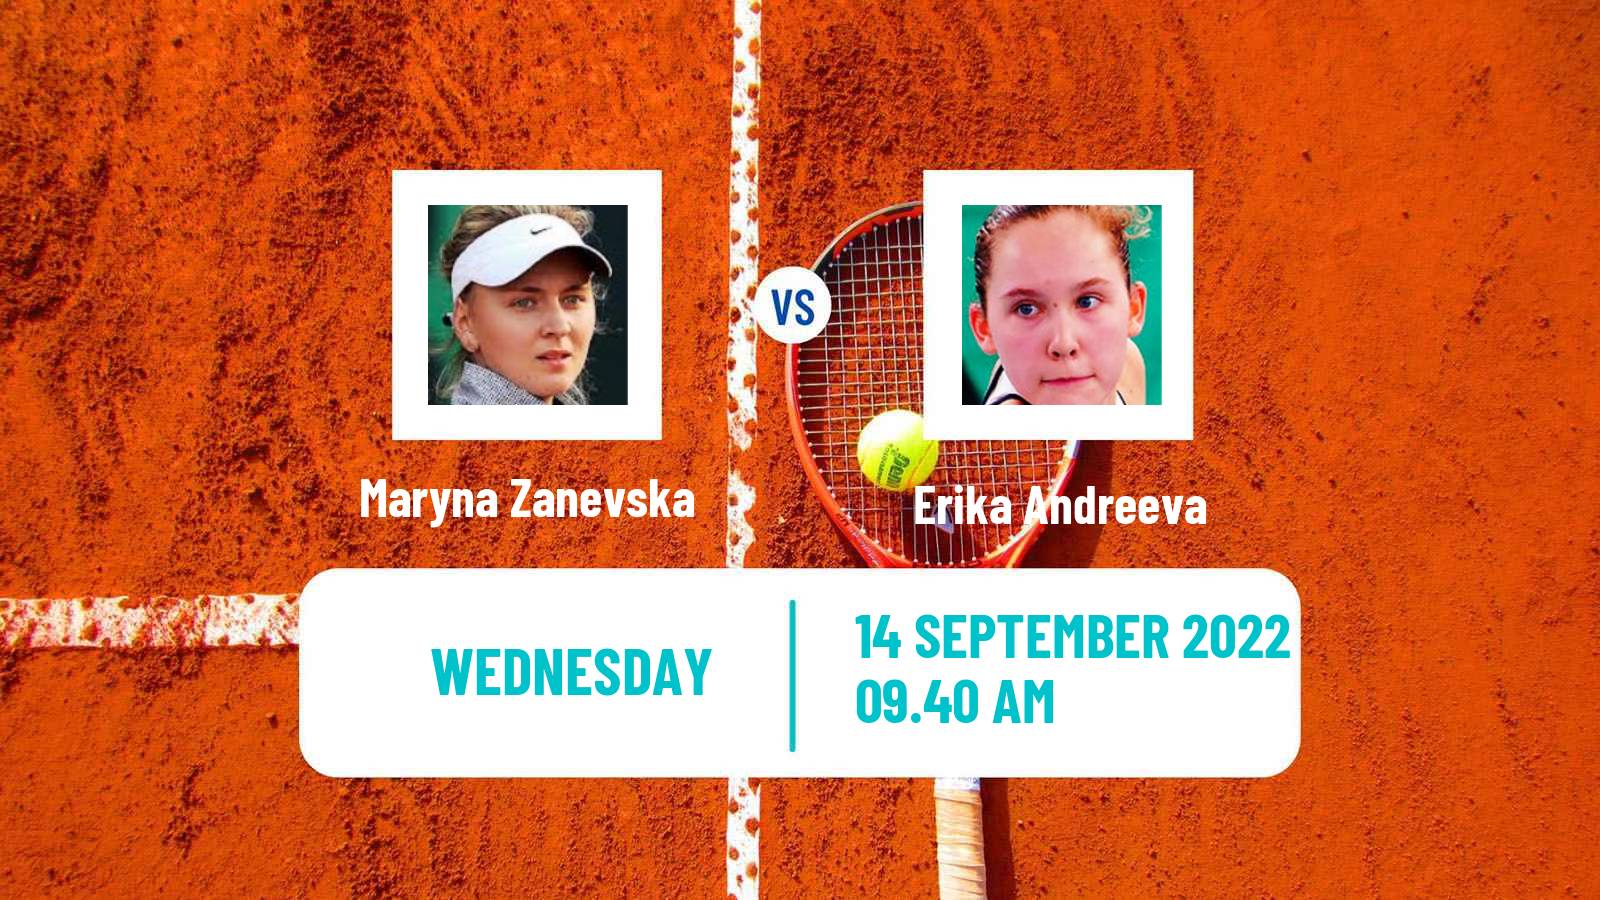 Tennis ATP Challenger Maryna Zanevska - Erika Andreeva